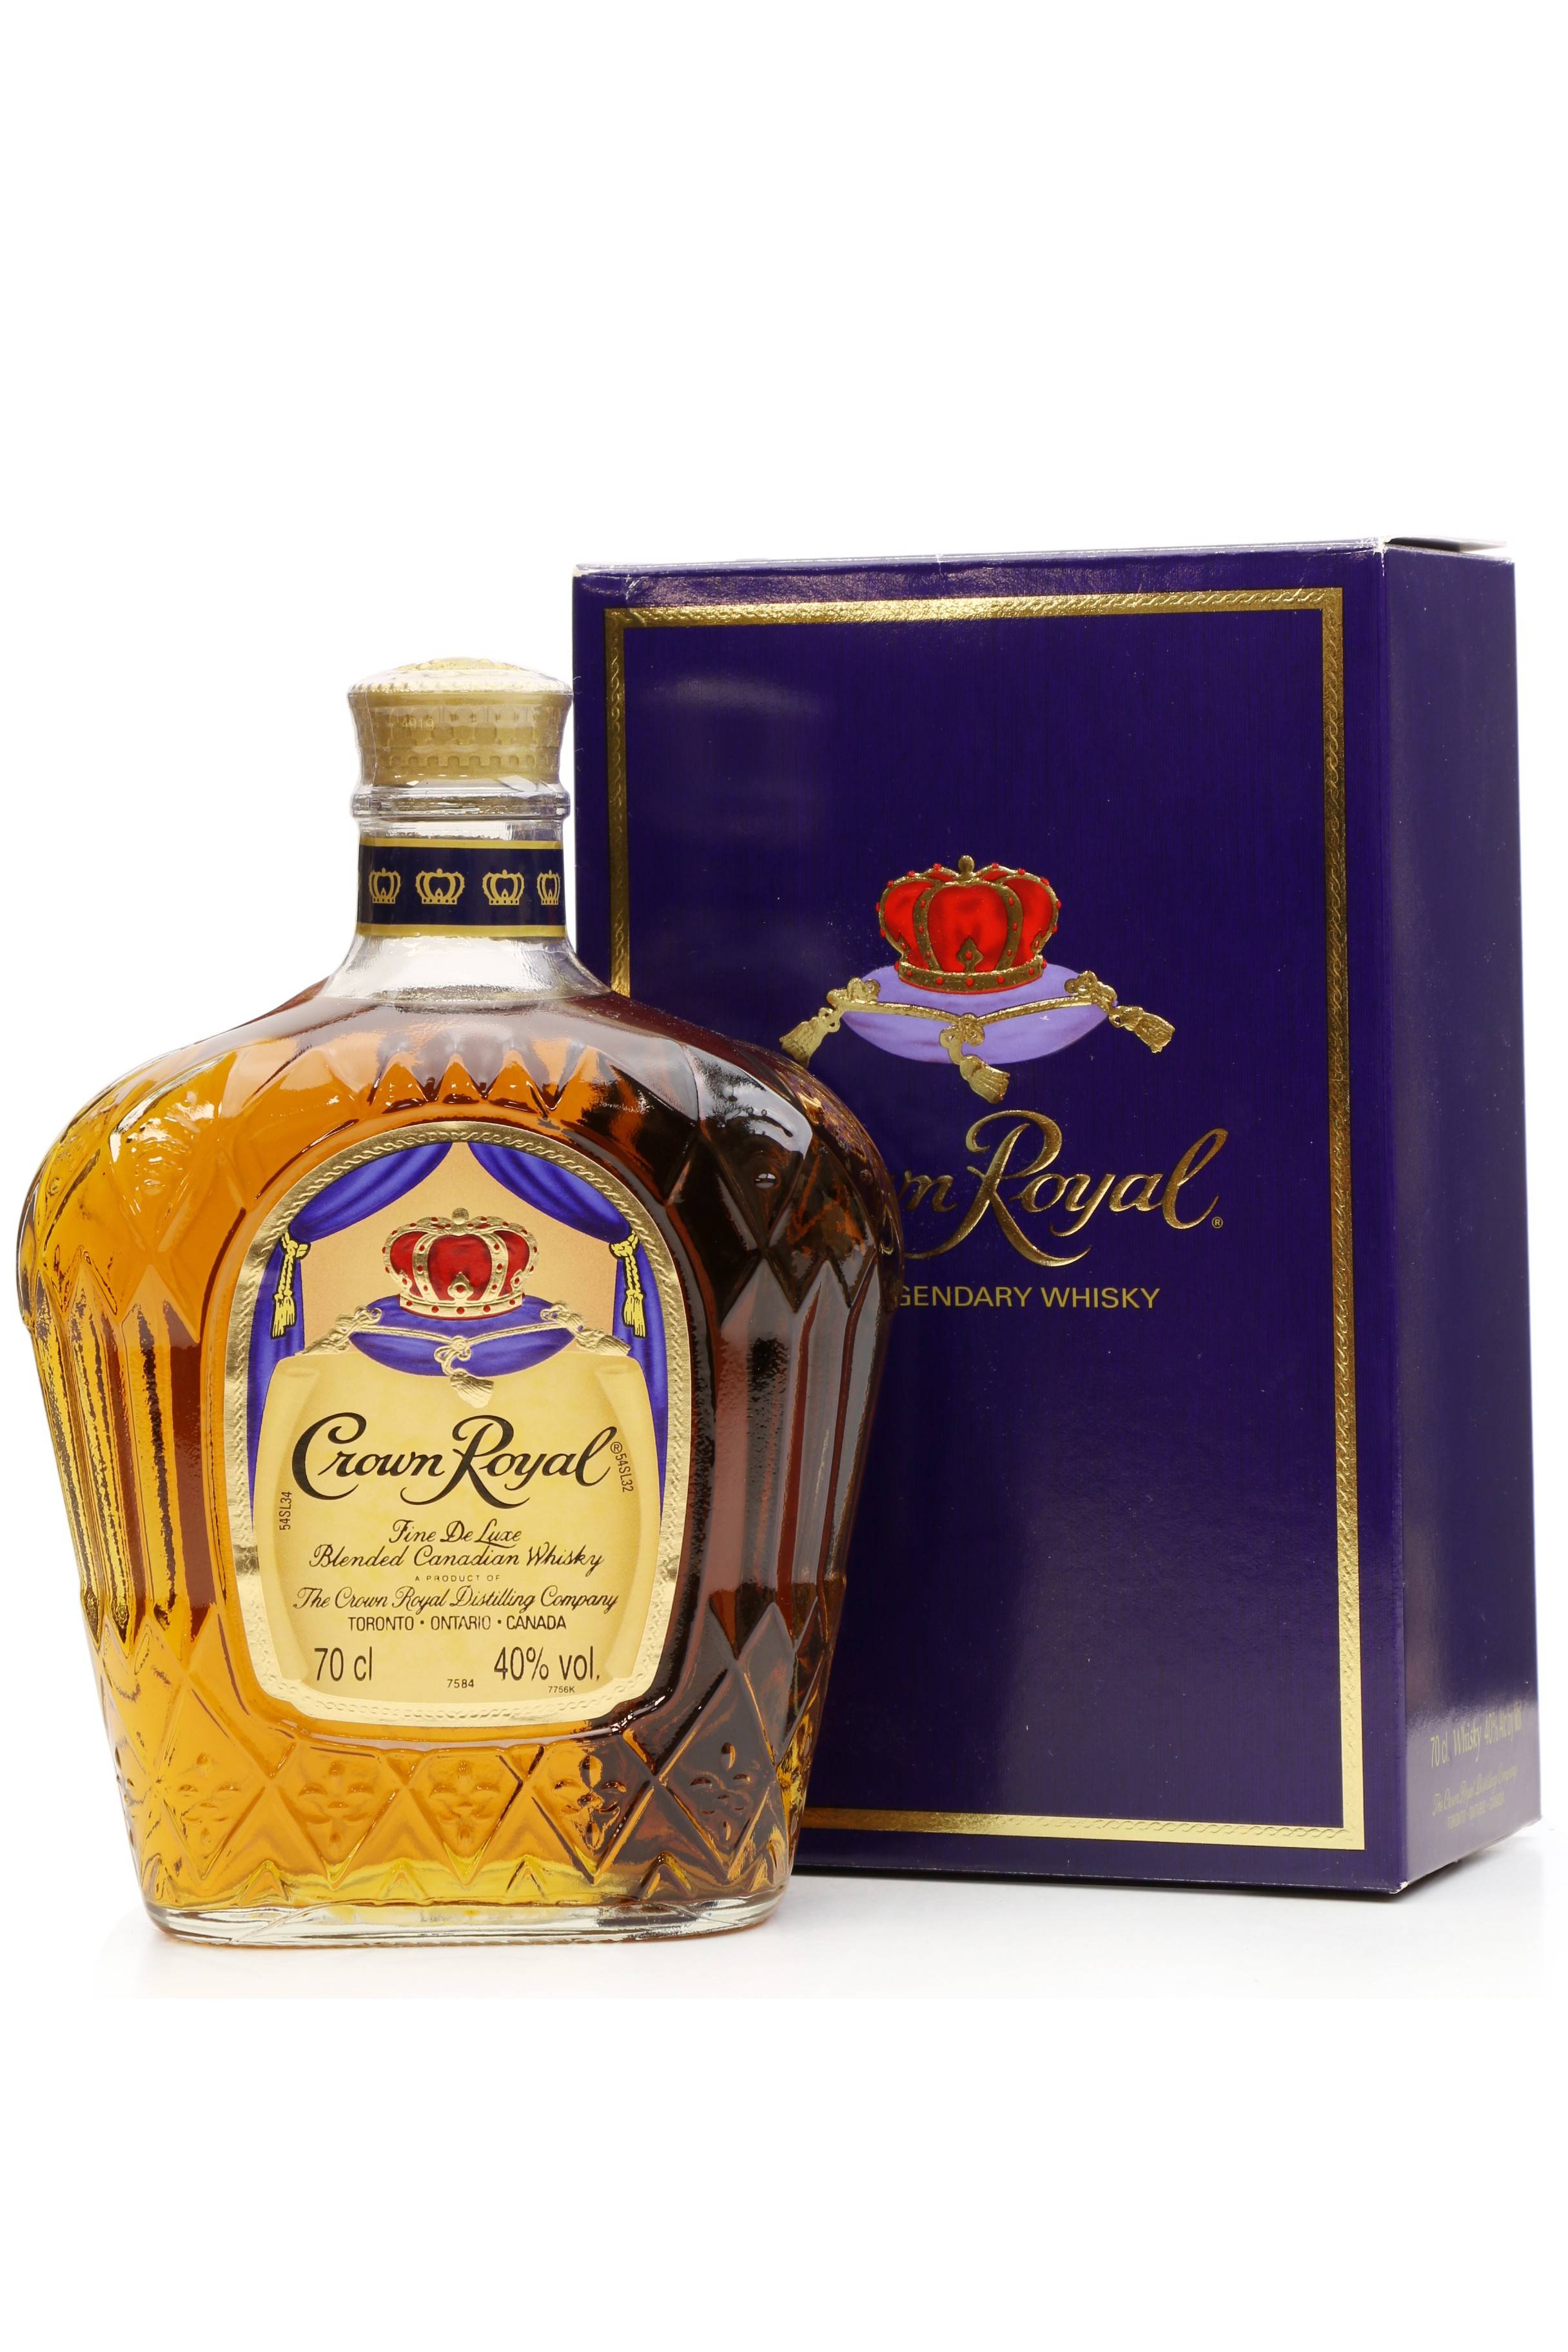 Crown Royal Fine De Luxe - Just Whisky Auctions